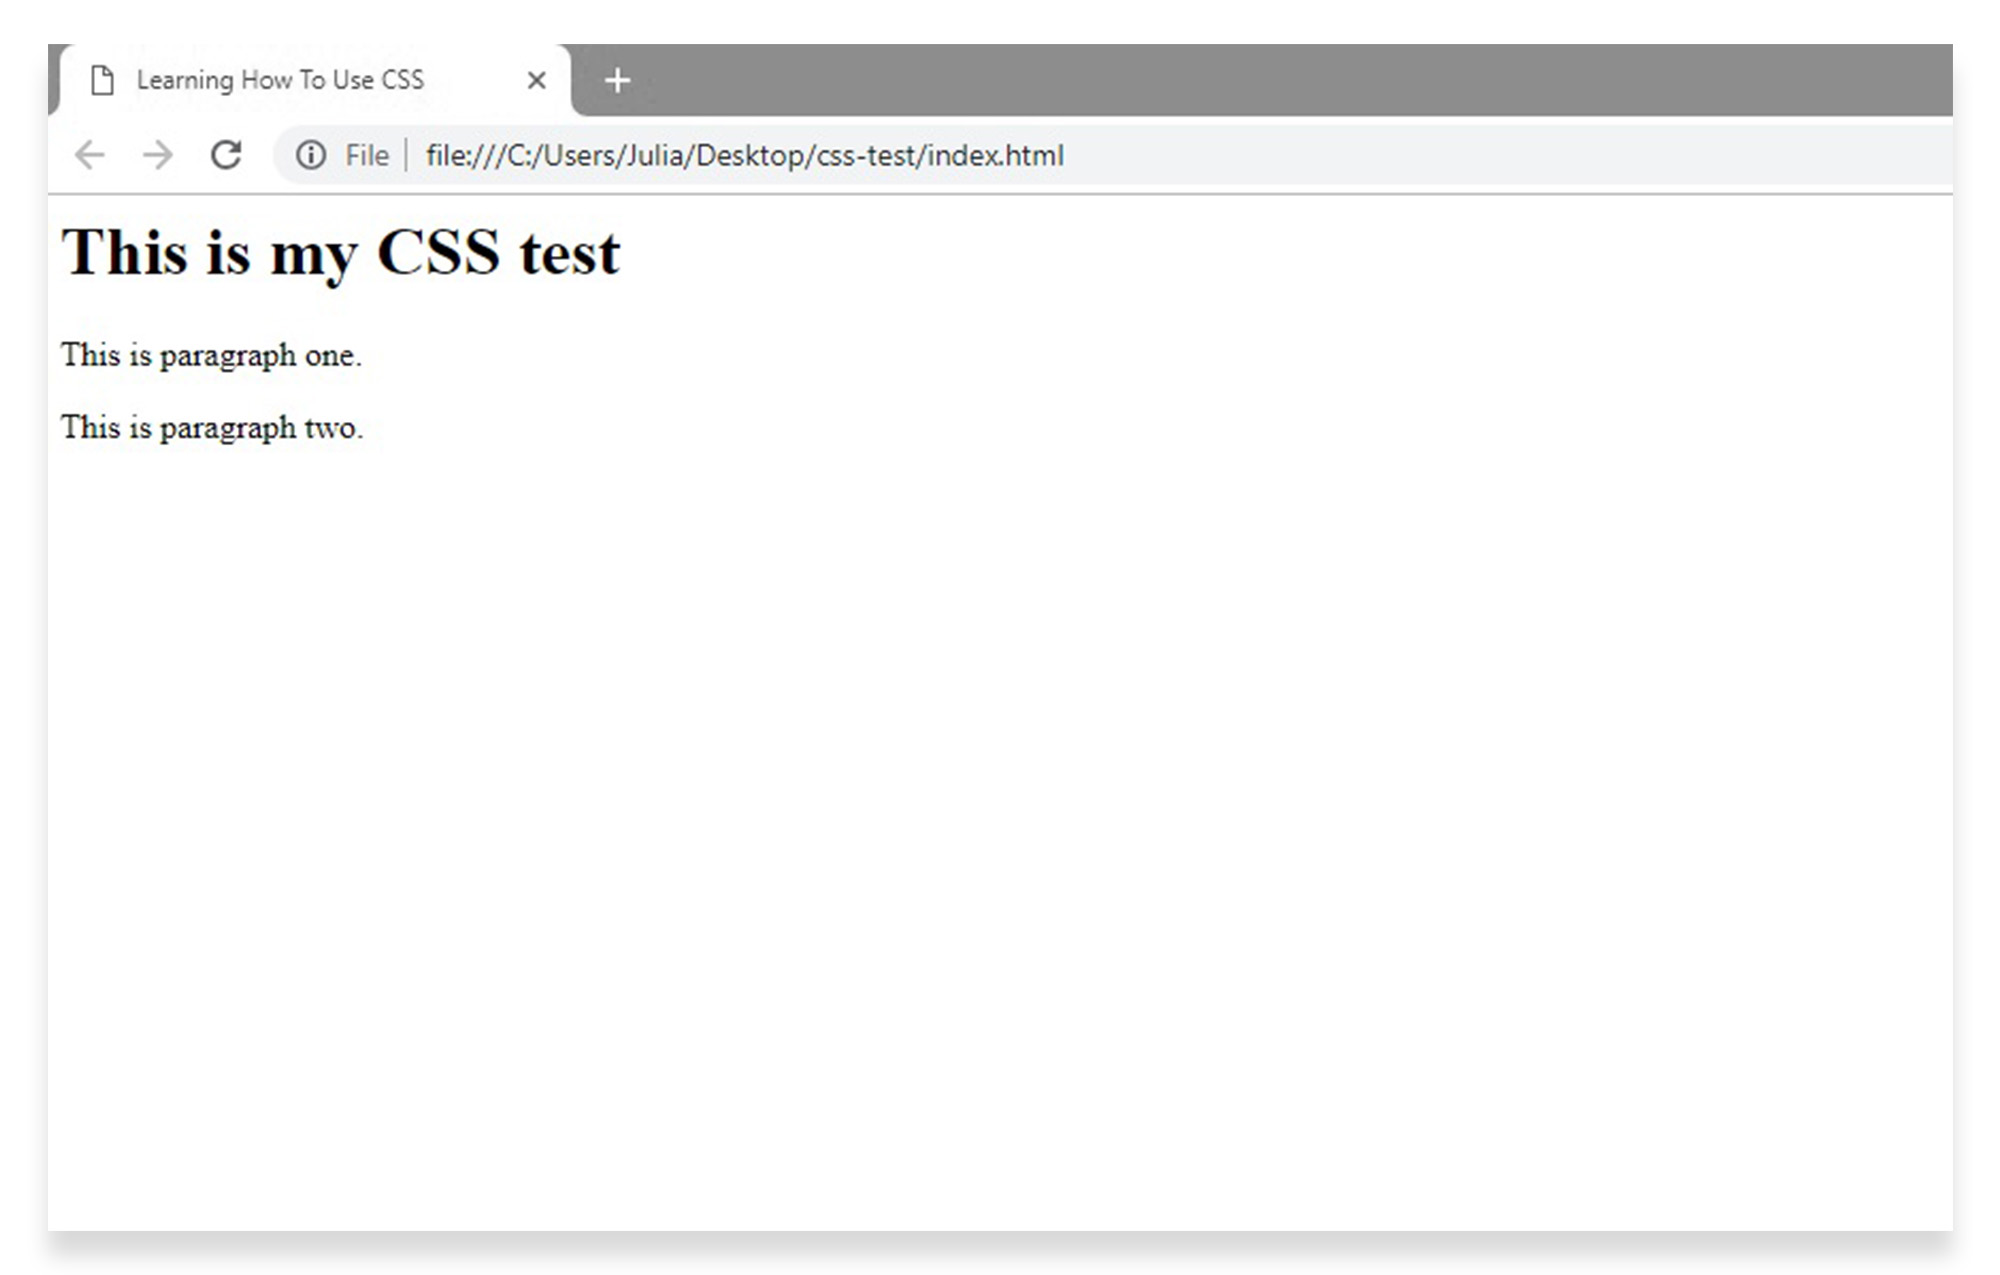 CSS tutorial